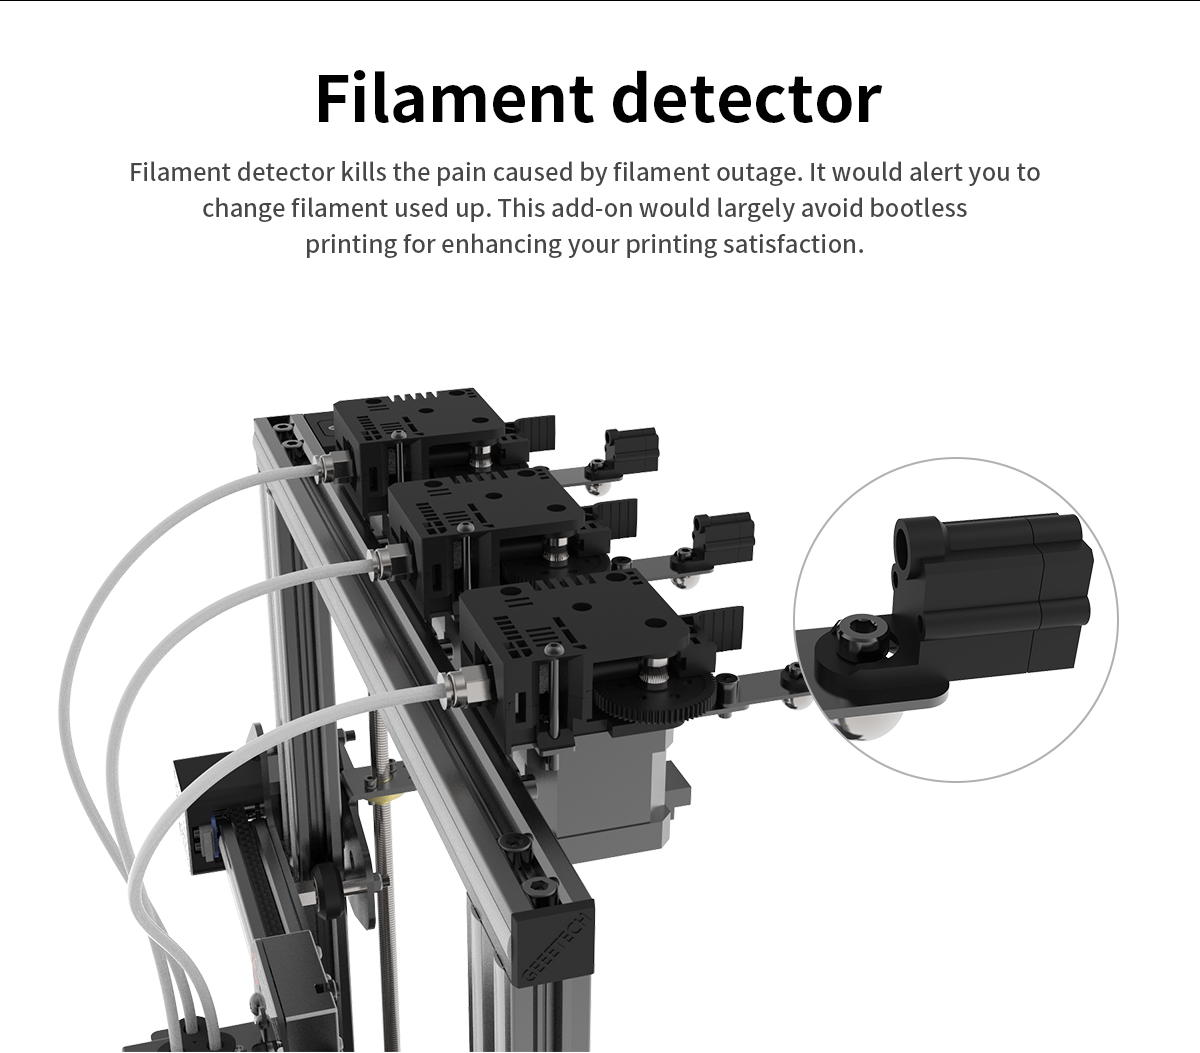 geeetech a20t description of filament detector